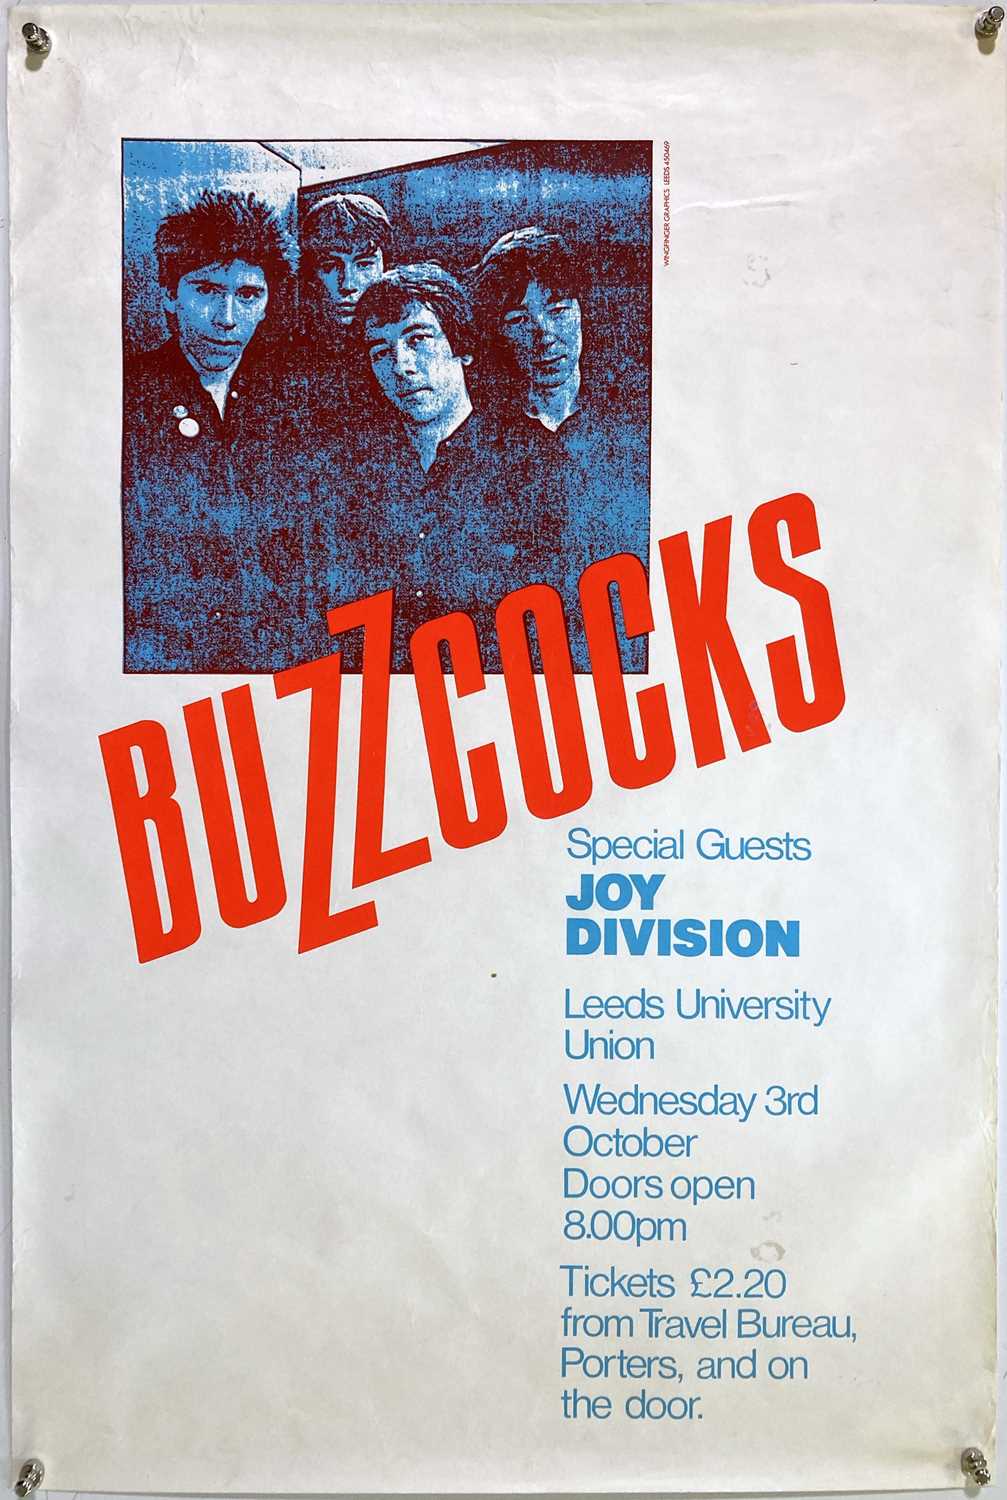 Lot 182 - BUZZCOCKS / JOY DIVISION 1979 CONCERT POSTER.